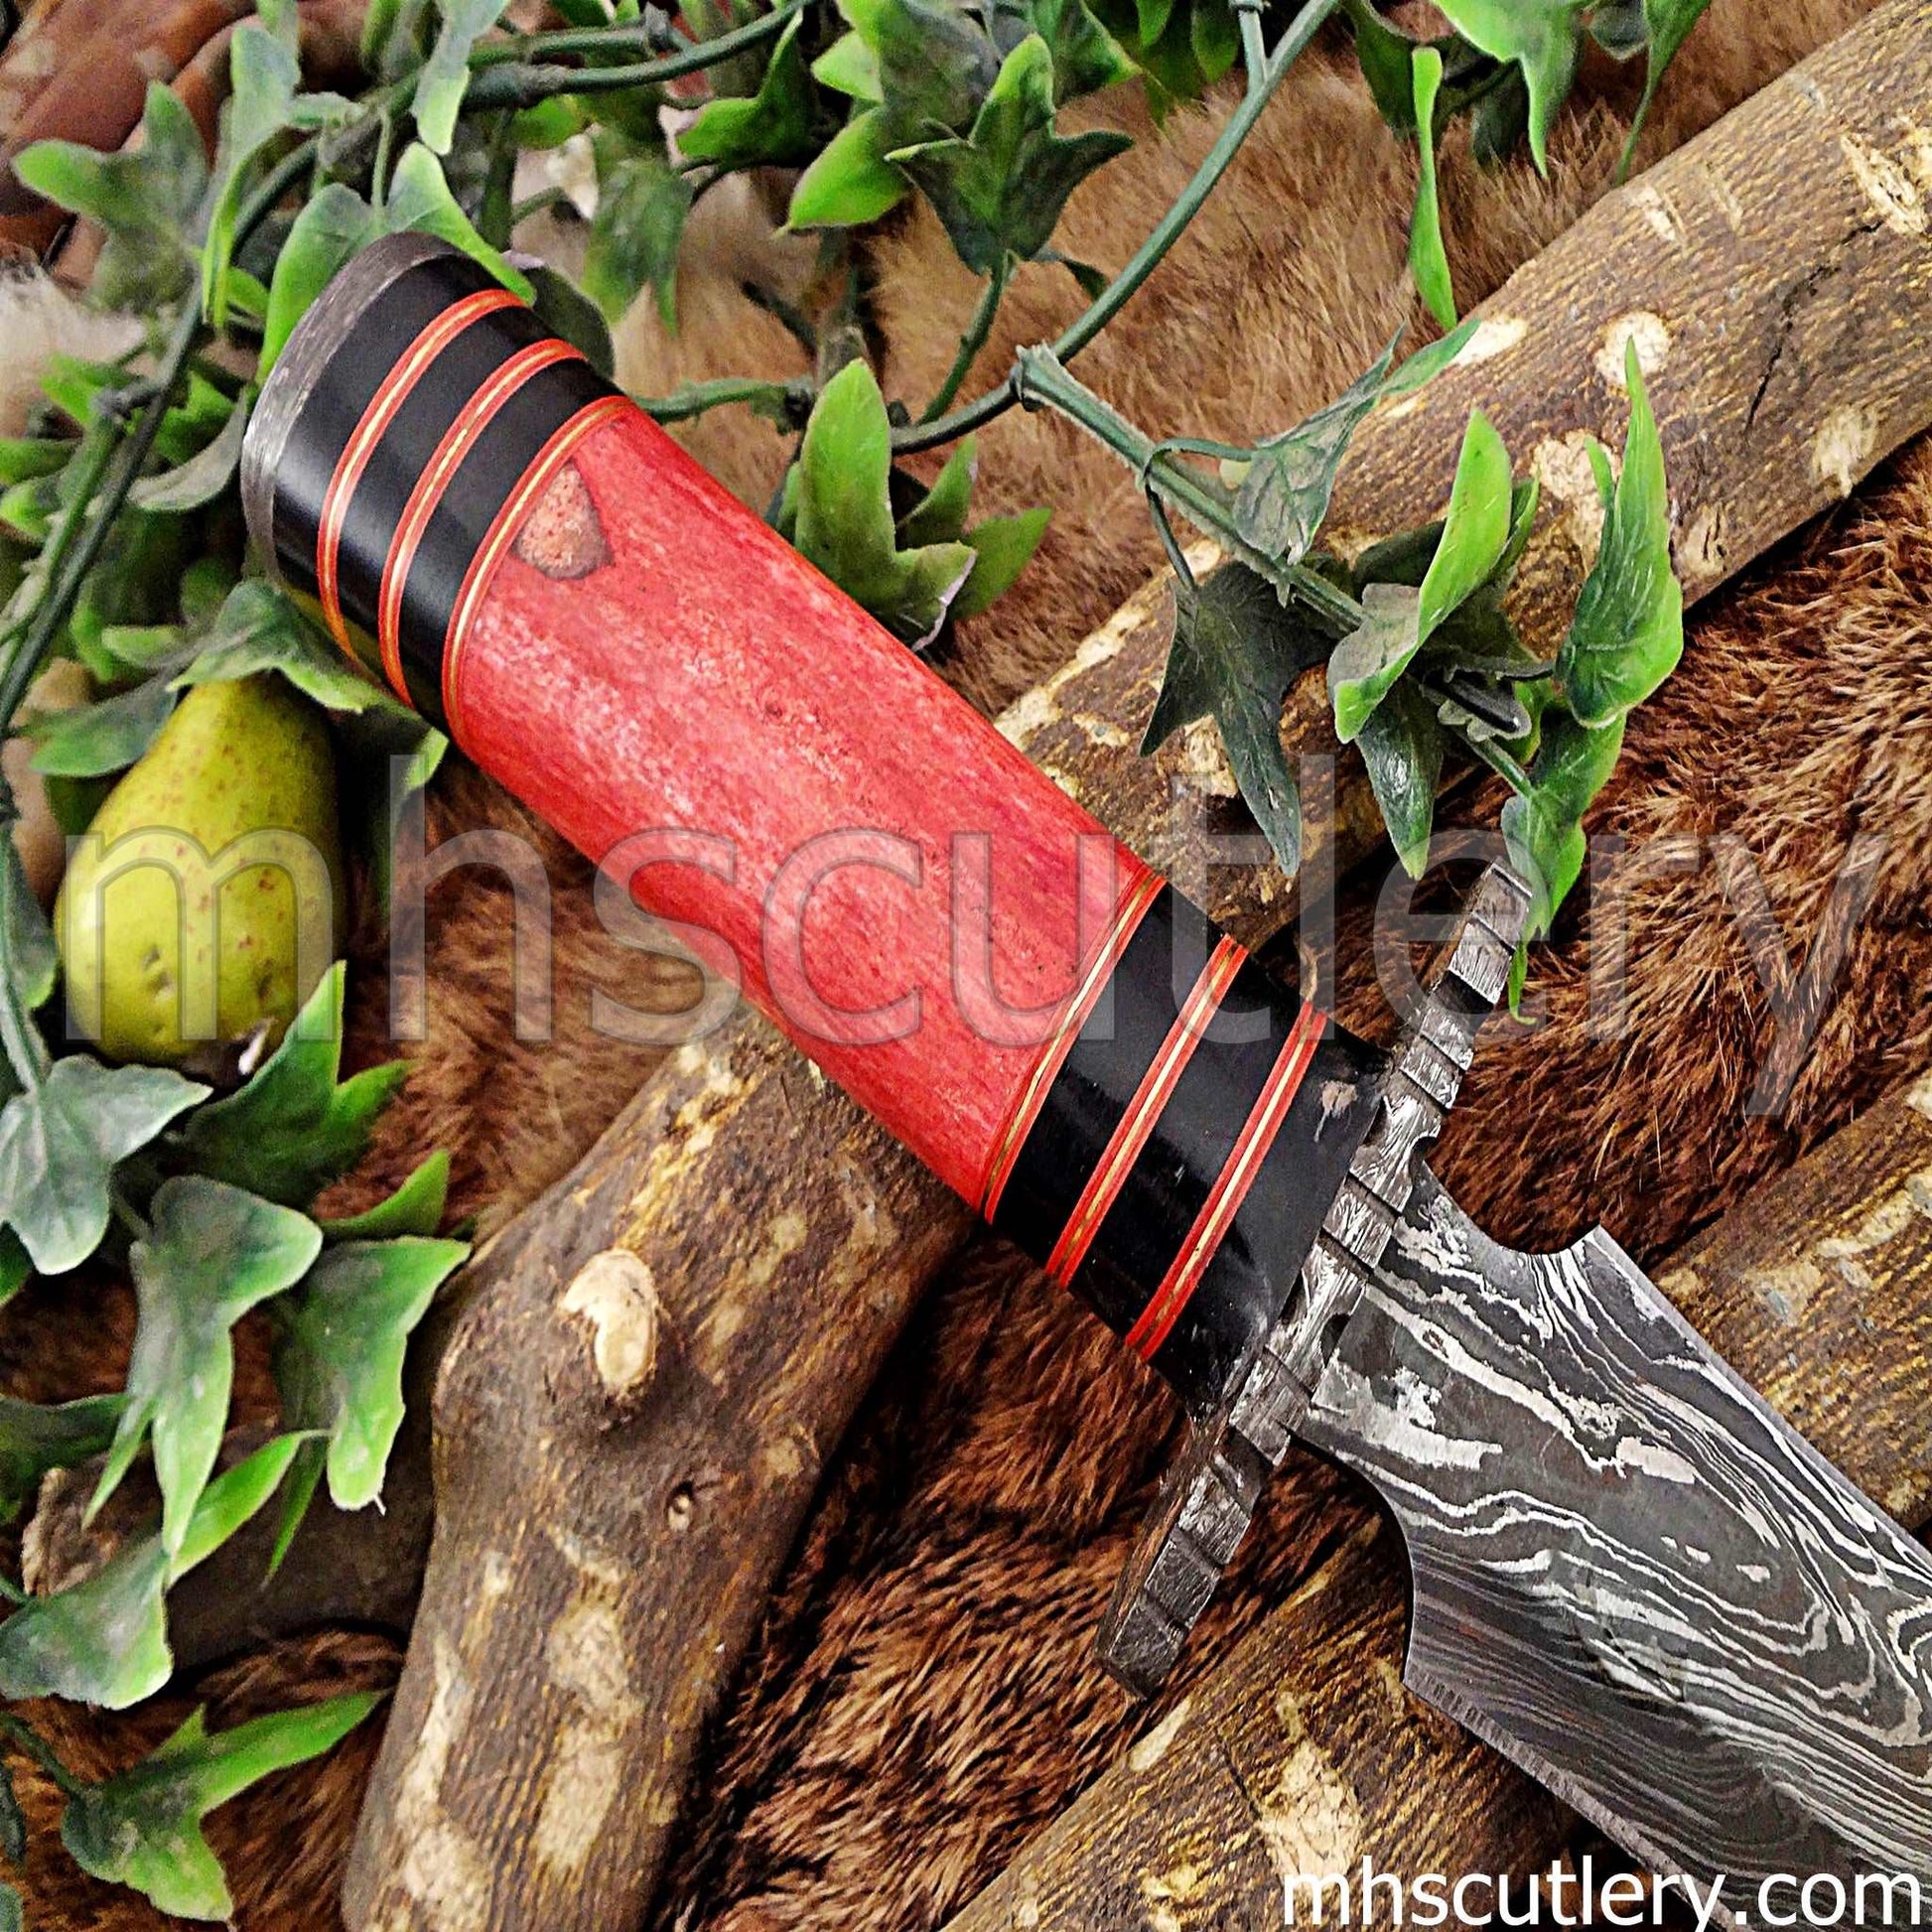 Custom Hand Forged Damascus Steel Hunters Dagger | mhscutlery